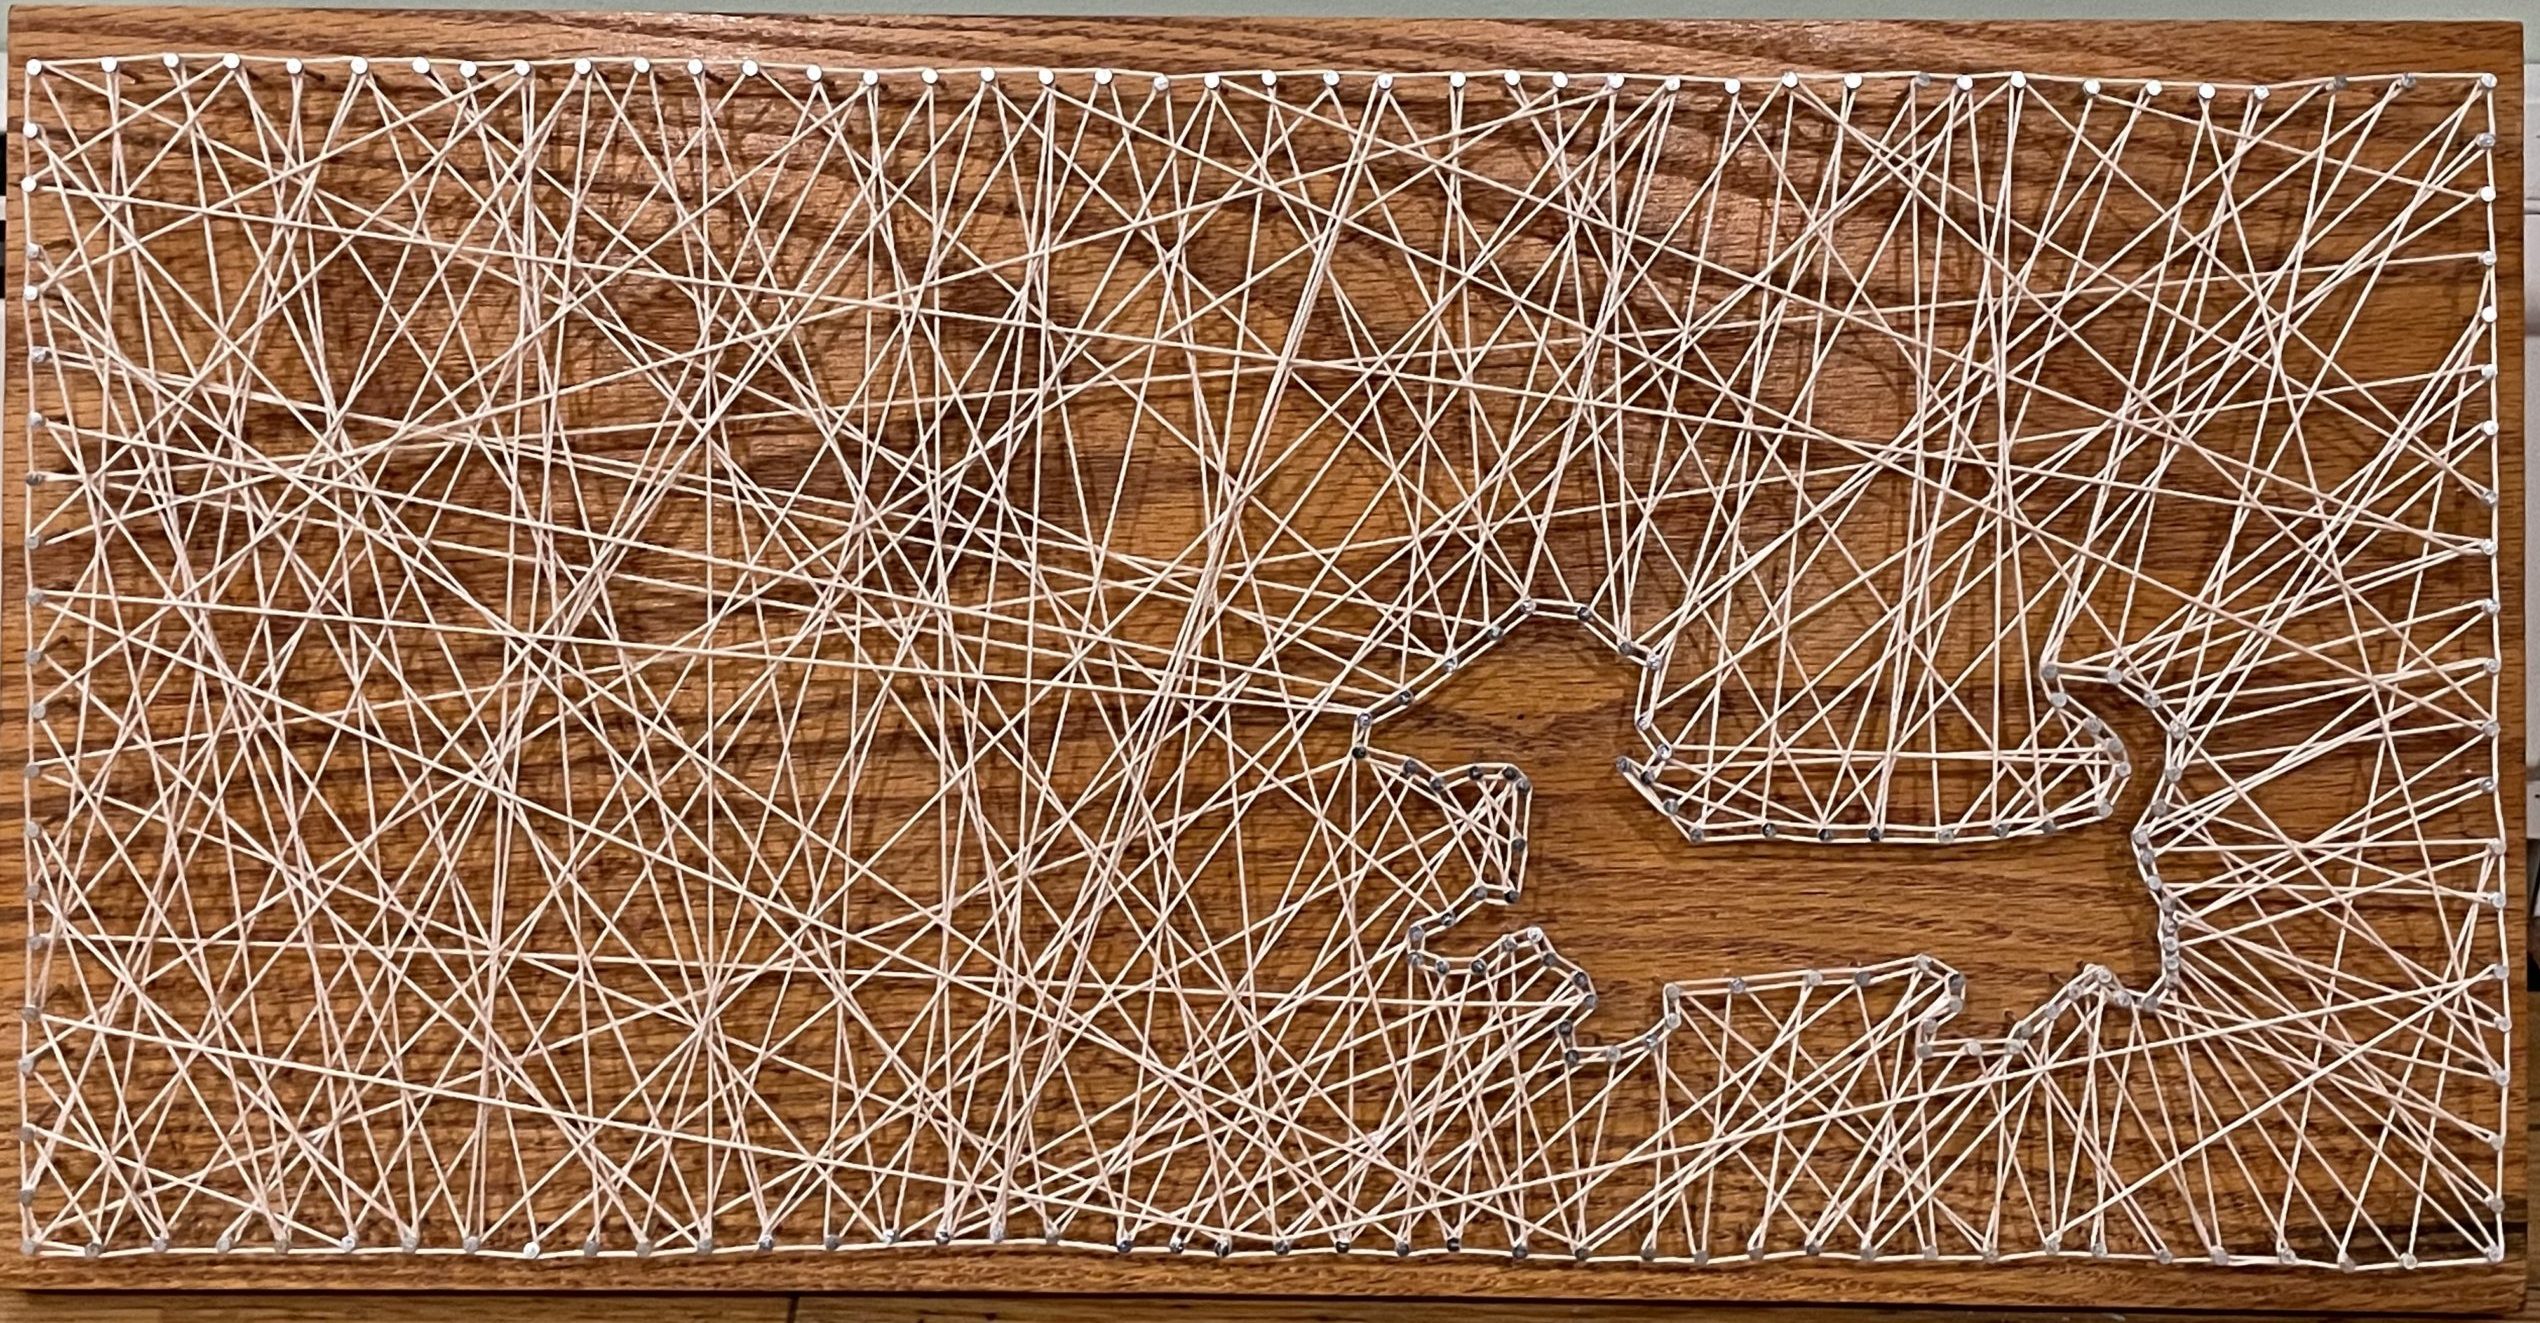 How to make DIY string art